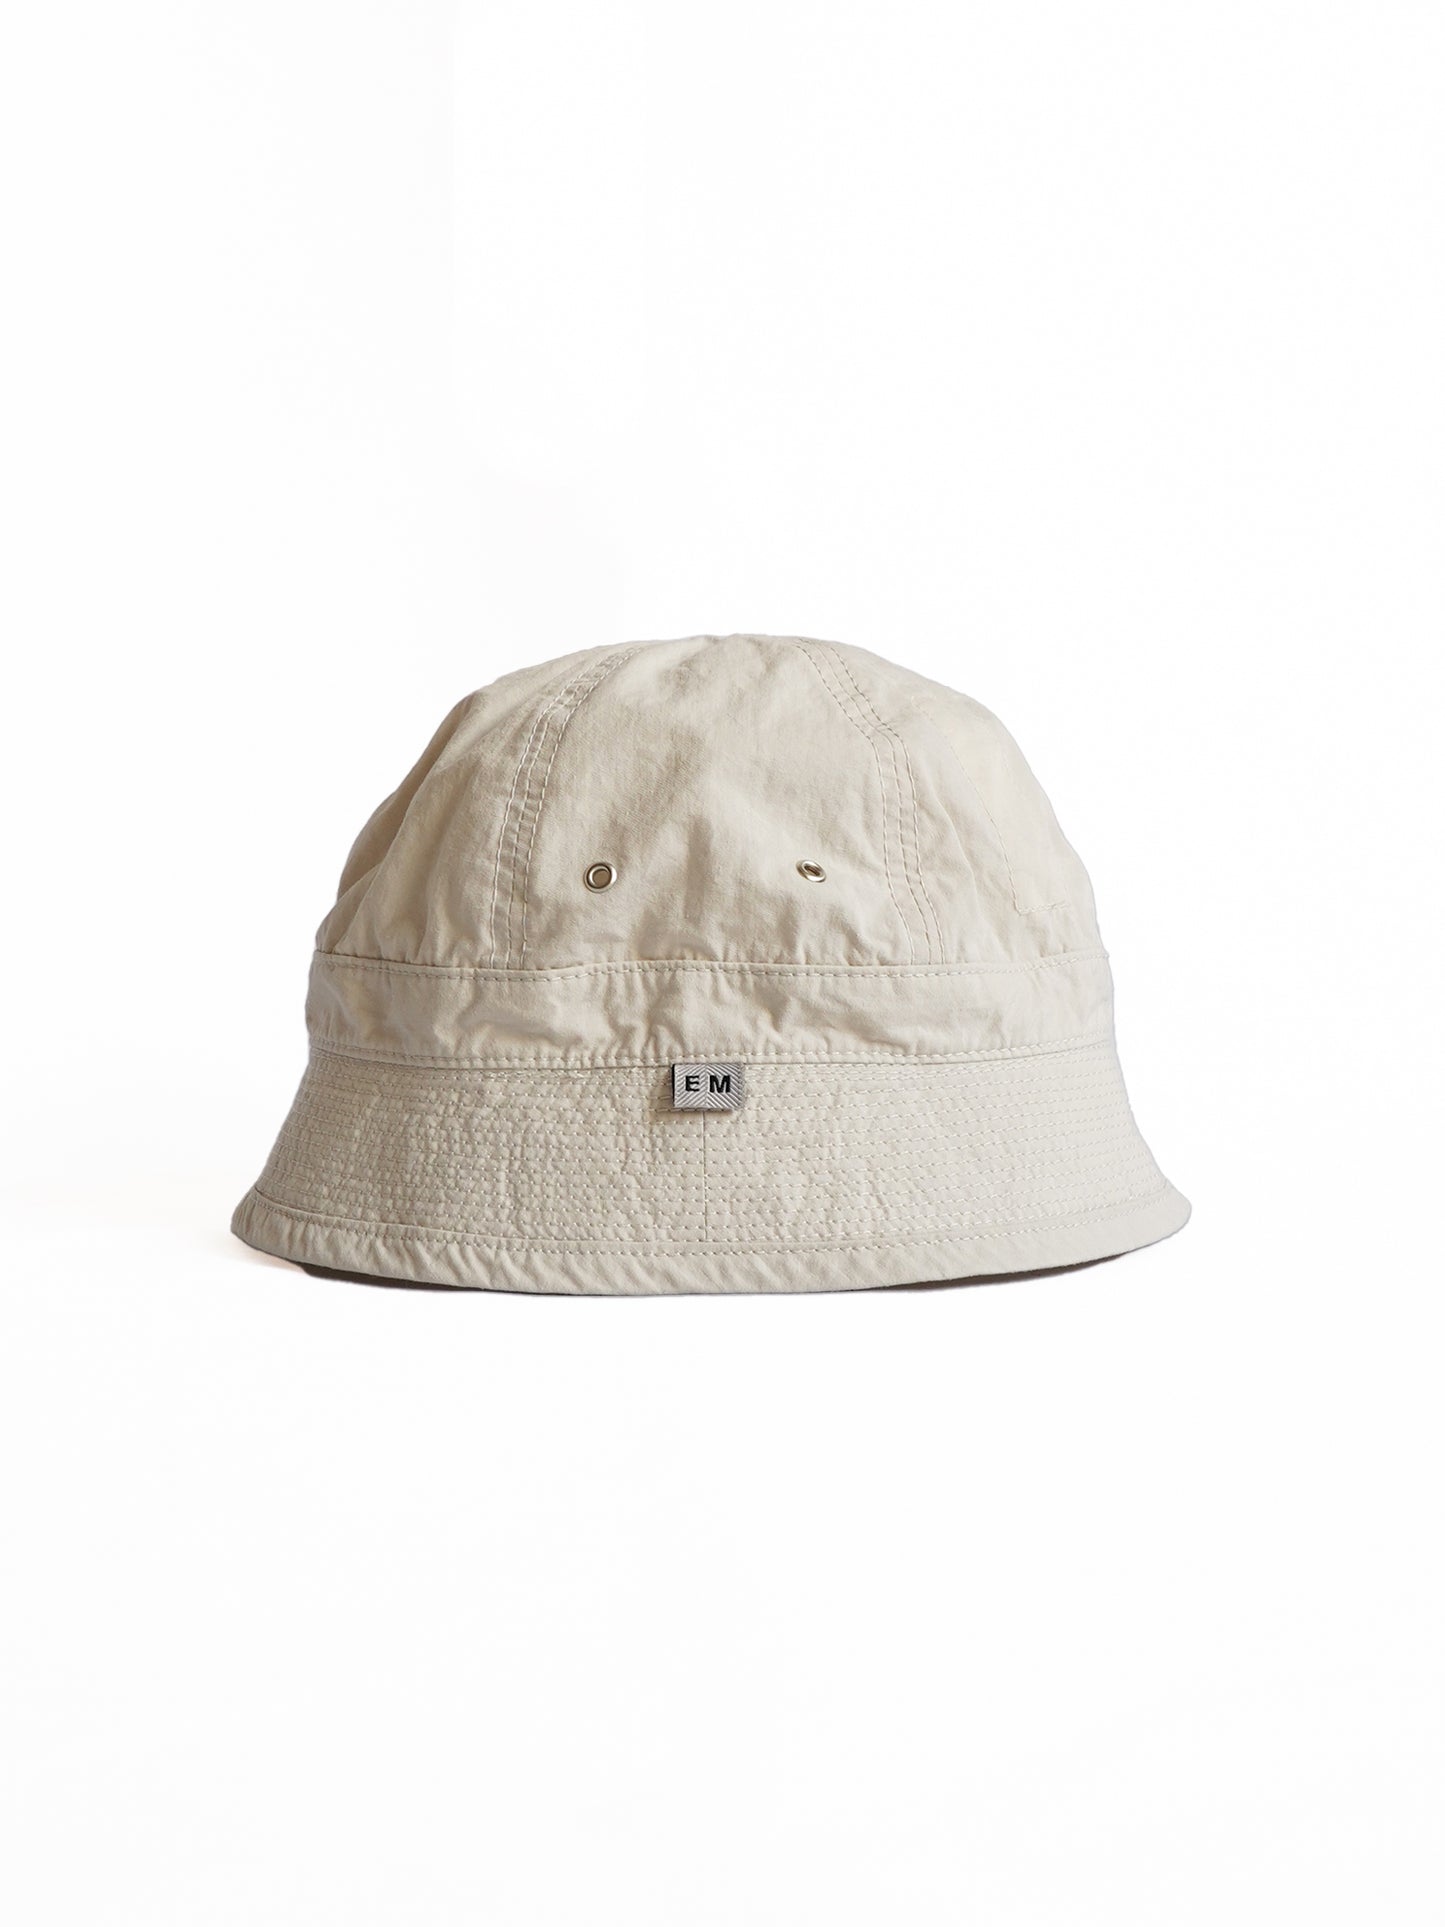 Army Hat (CH Limited)